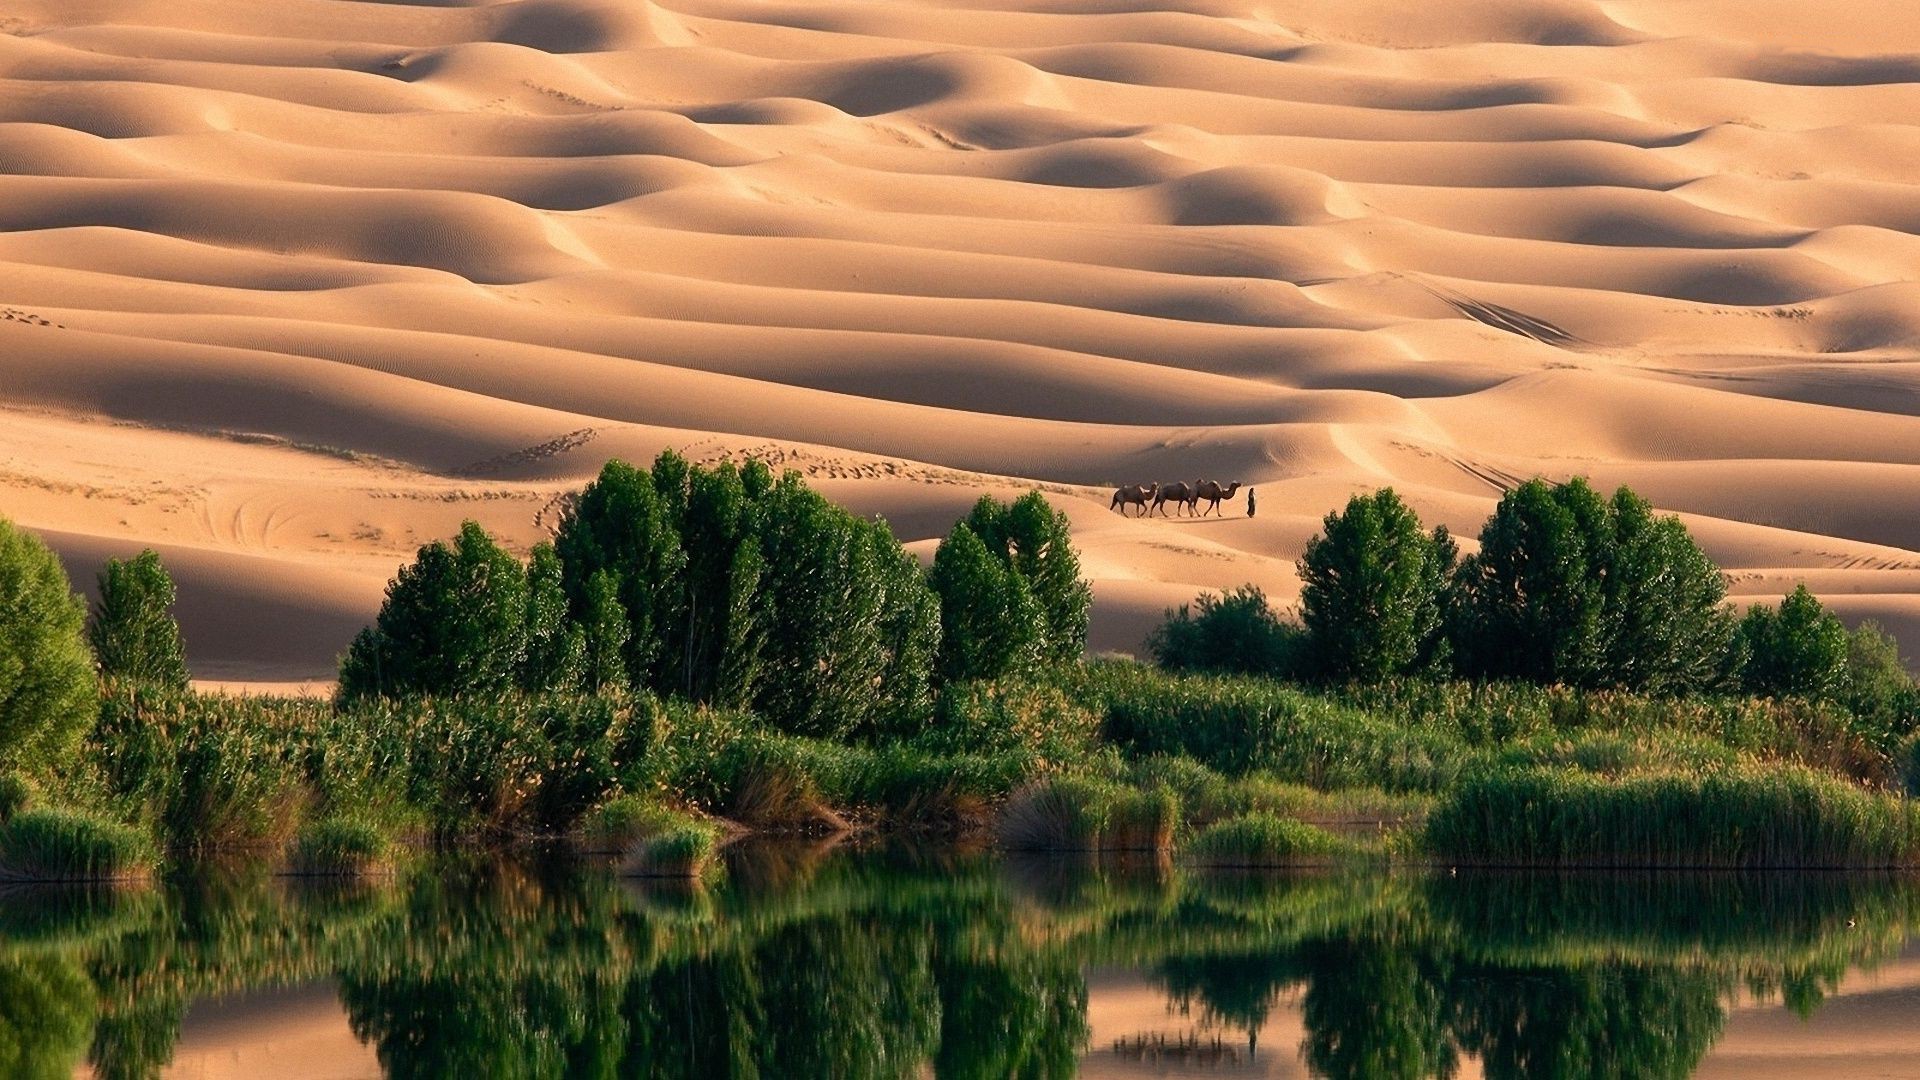 General 1920x1080 desert dunes trees nature landscape oasis reflection